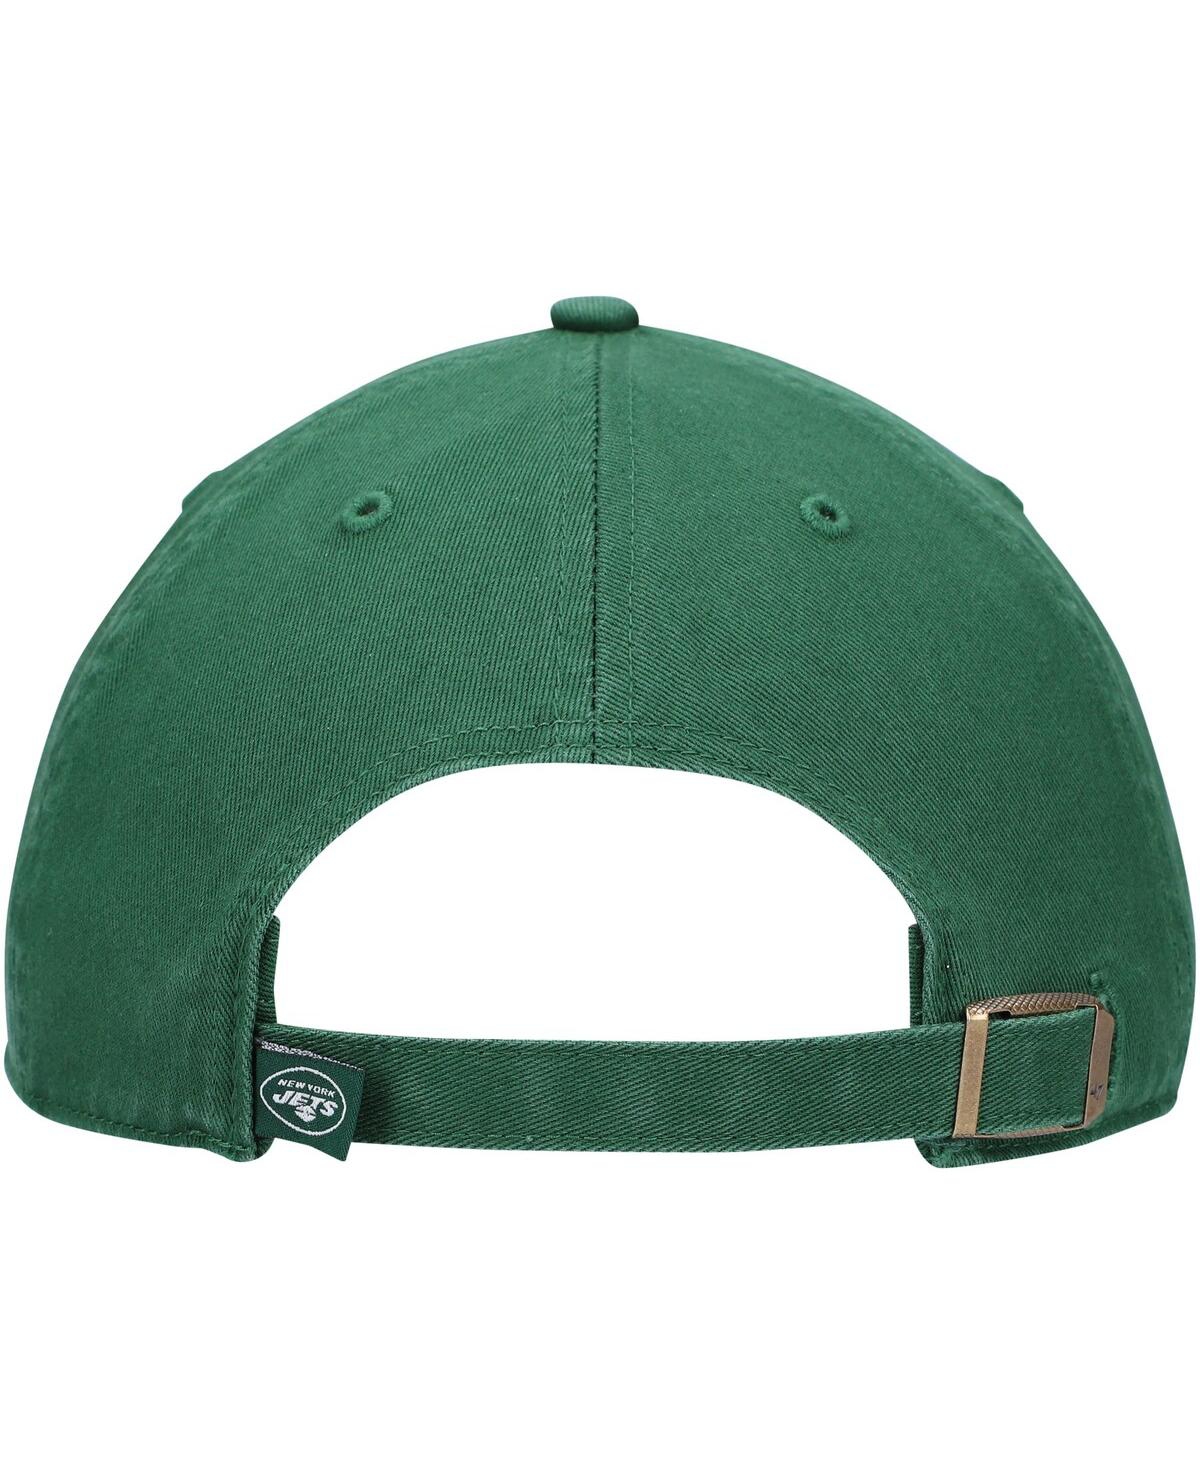 Shop 47 Brand Men's '47 Green New York Jets Clean Up Script Adjustable Hat